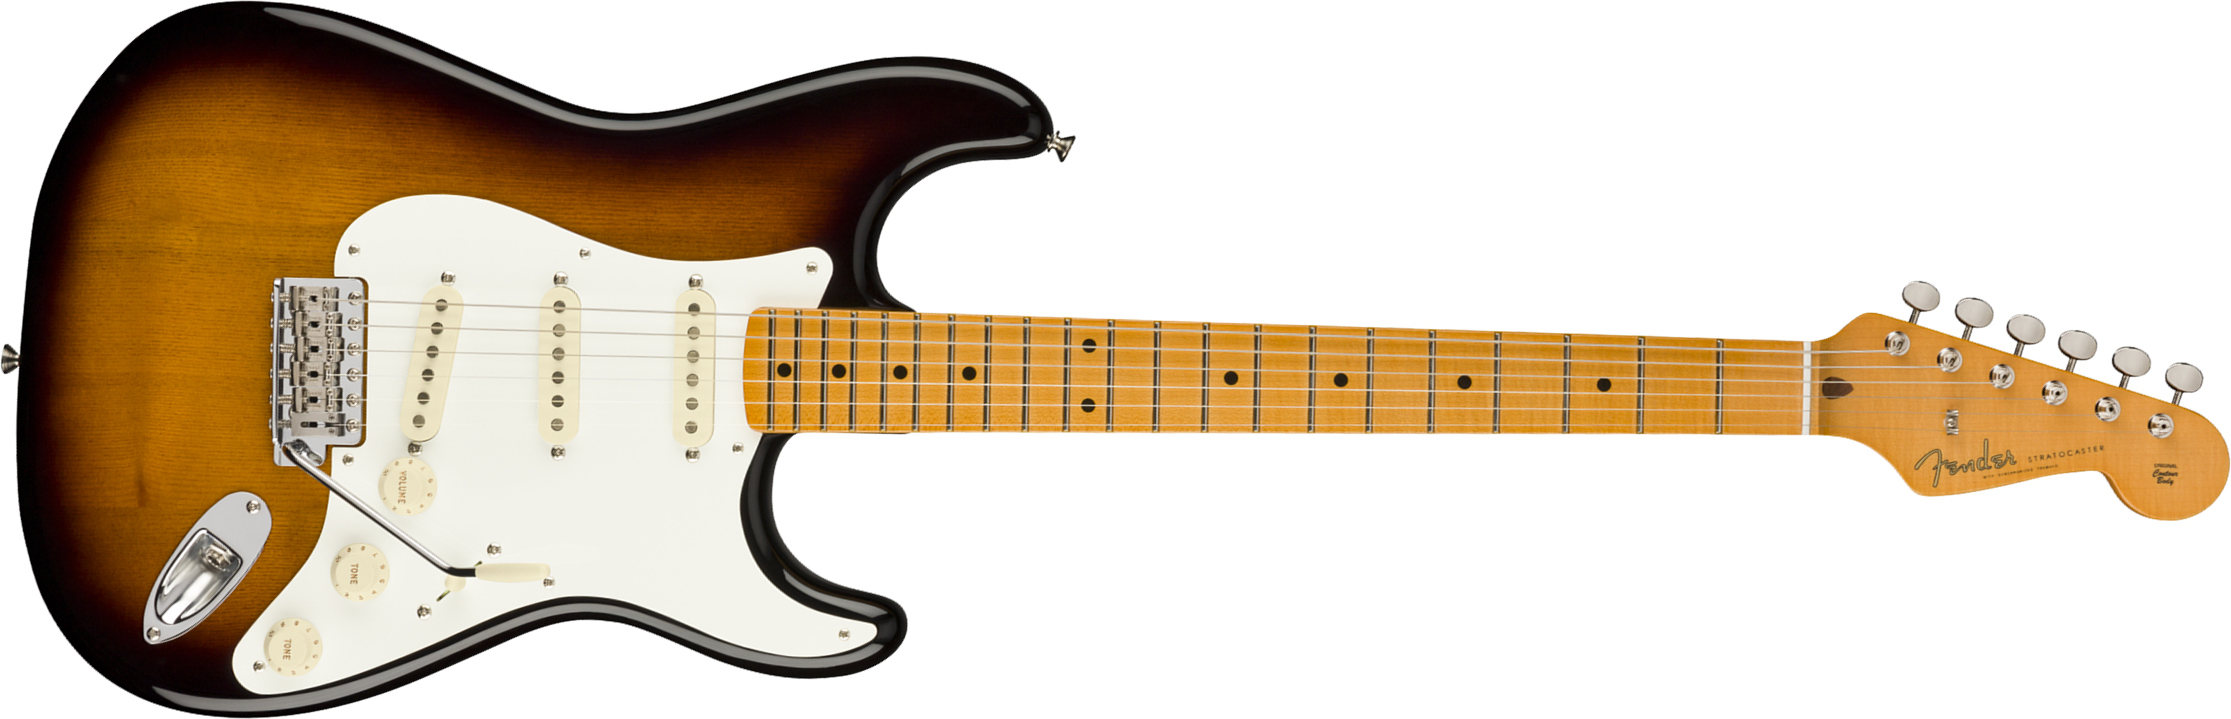 Fender Eric Johnson Strat 1954 Virginia Stories Collection Usa Signature Mn - 2-color Sunburst - Str shape electric guitar - Main picture